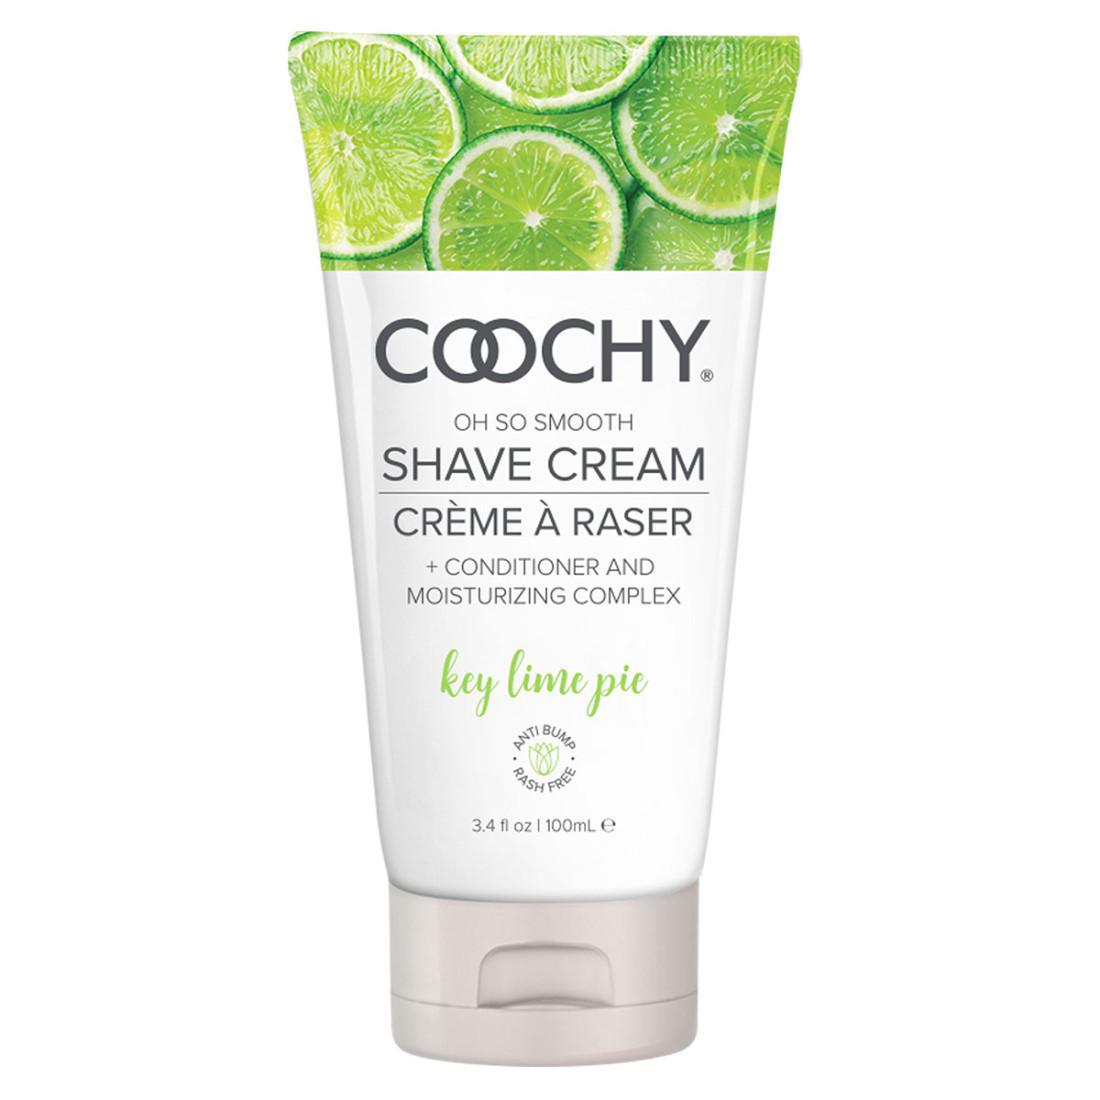 Coochy Shave Cream Key Lime